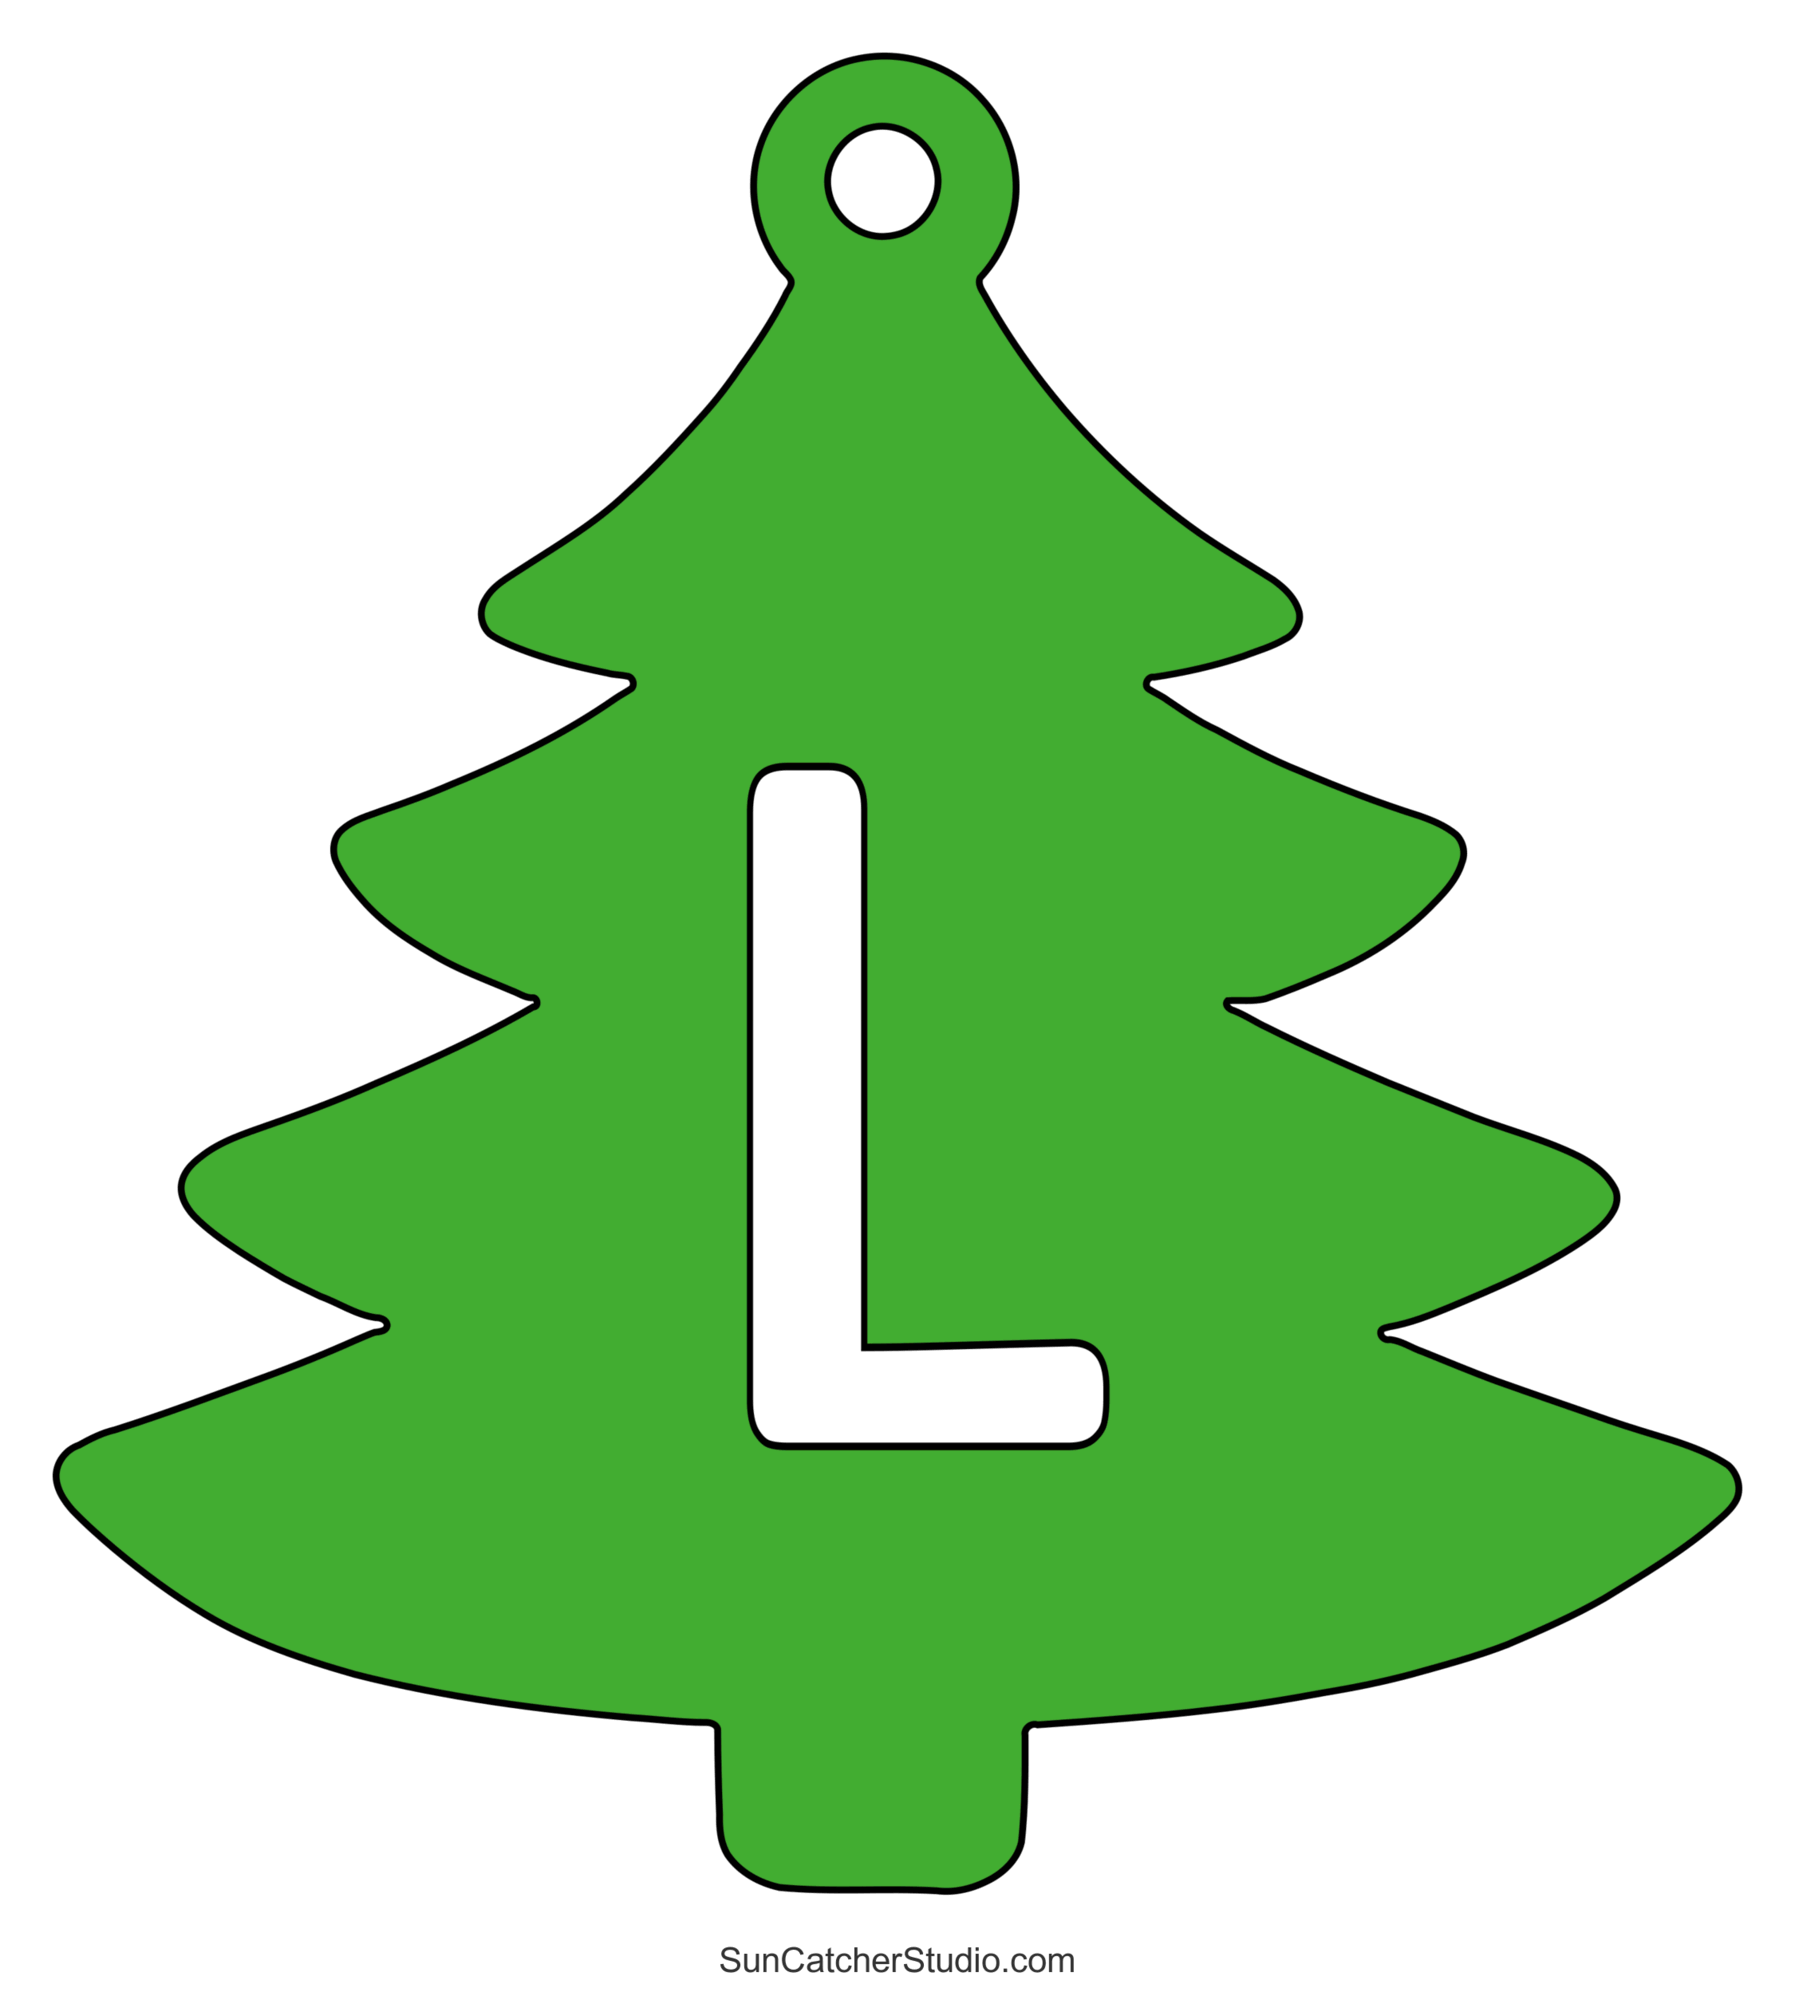 https://suncatcherstudio.com/uploads/lettering-fonts/christmas-tree-stencils/pdf-png/christmas-tree-stencil-letter-l-fefefe-44aa33.png